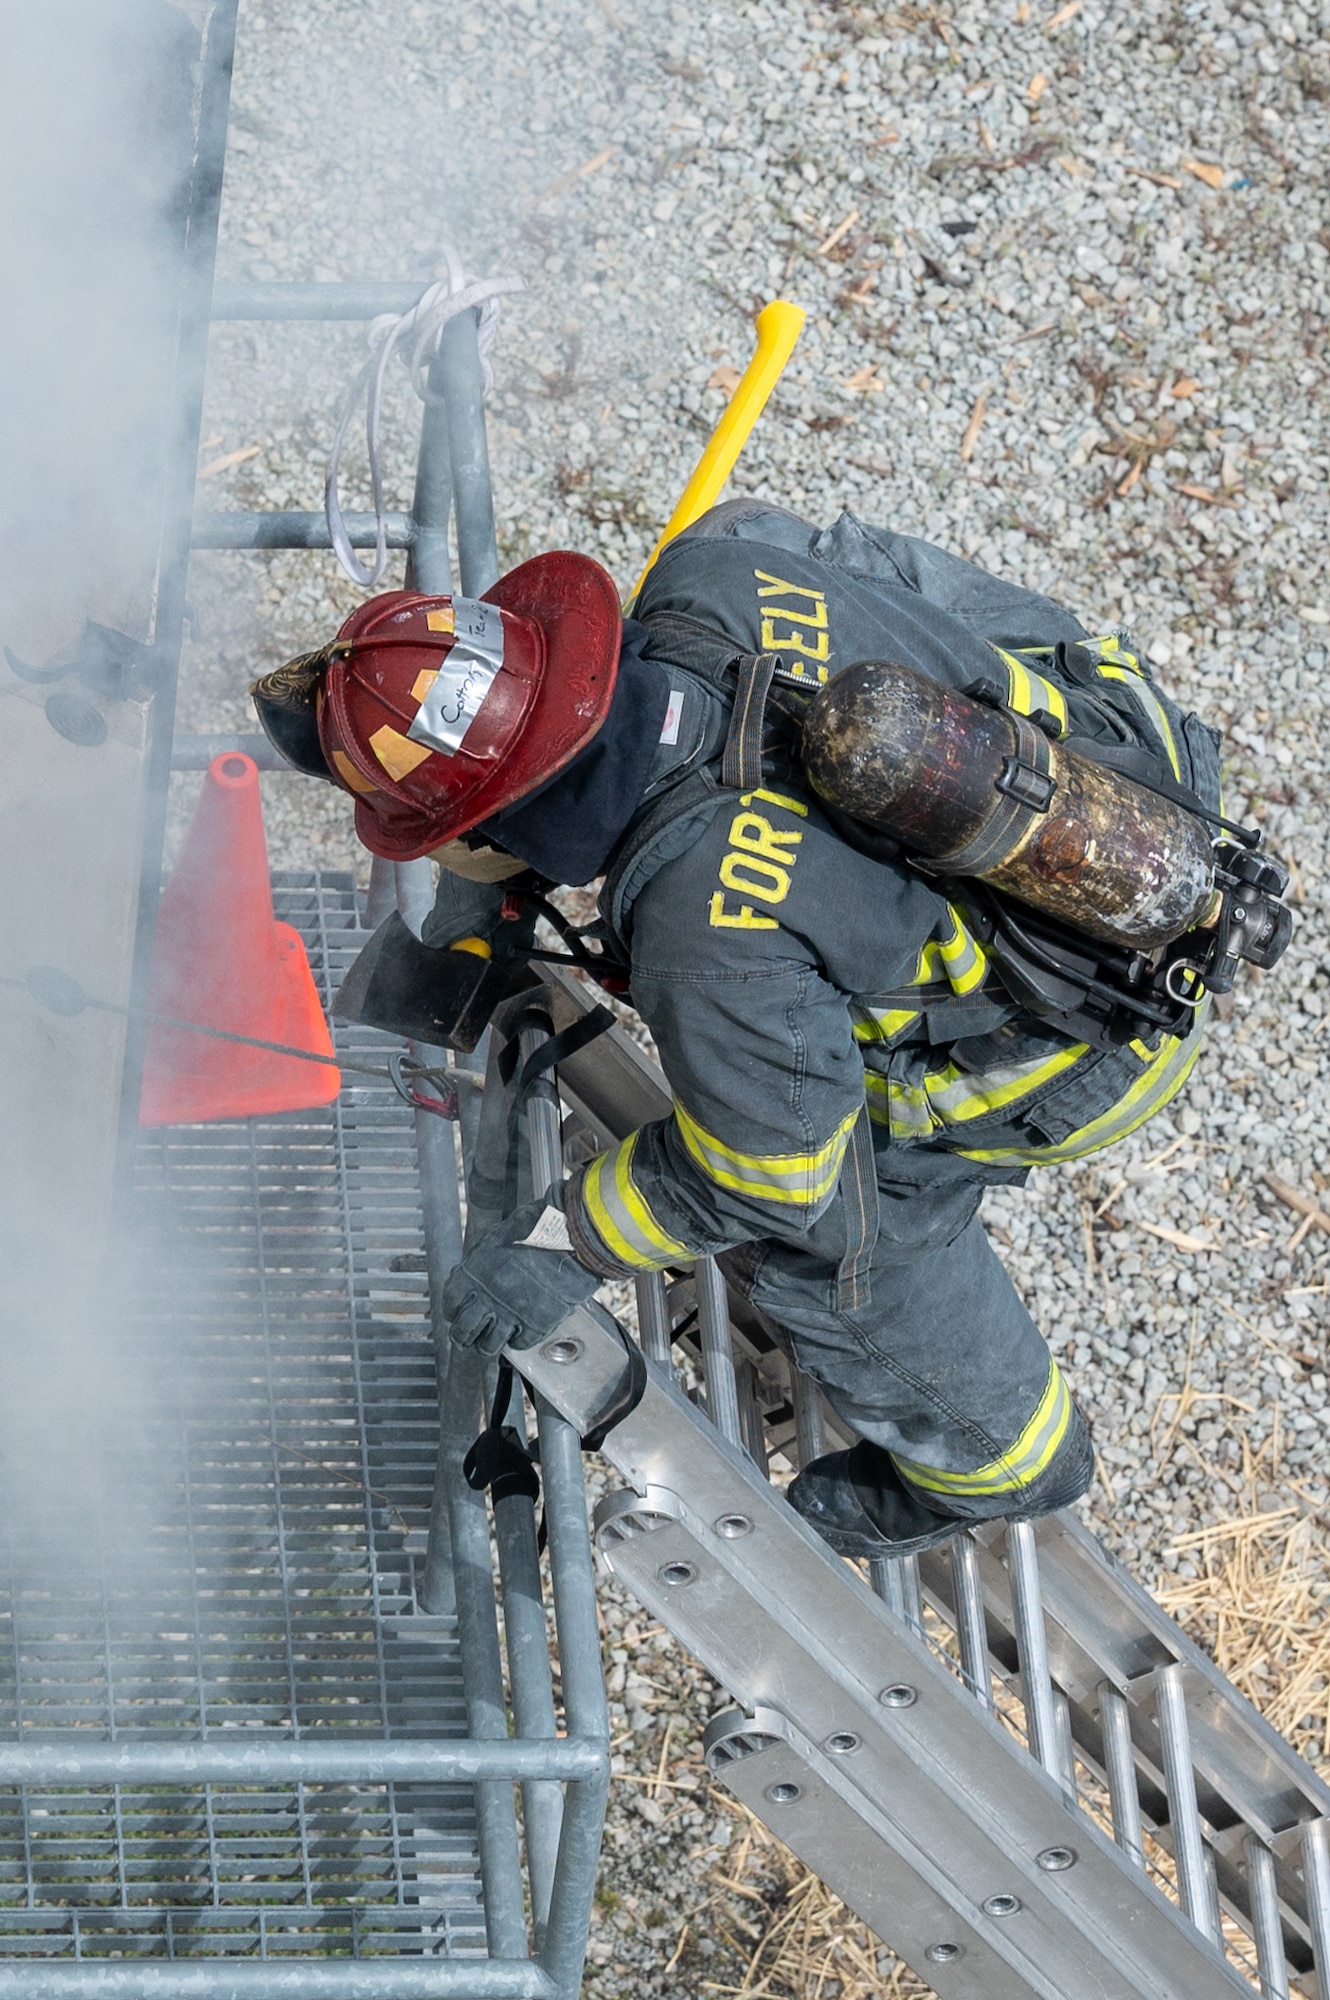 An aerial image of a uniformed firefighter climbing a metal ladder with an axe.